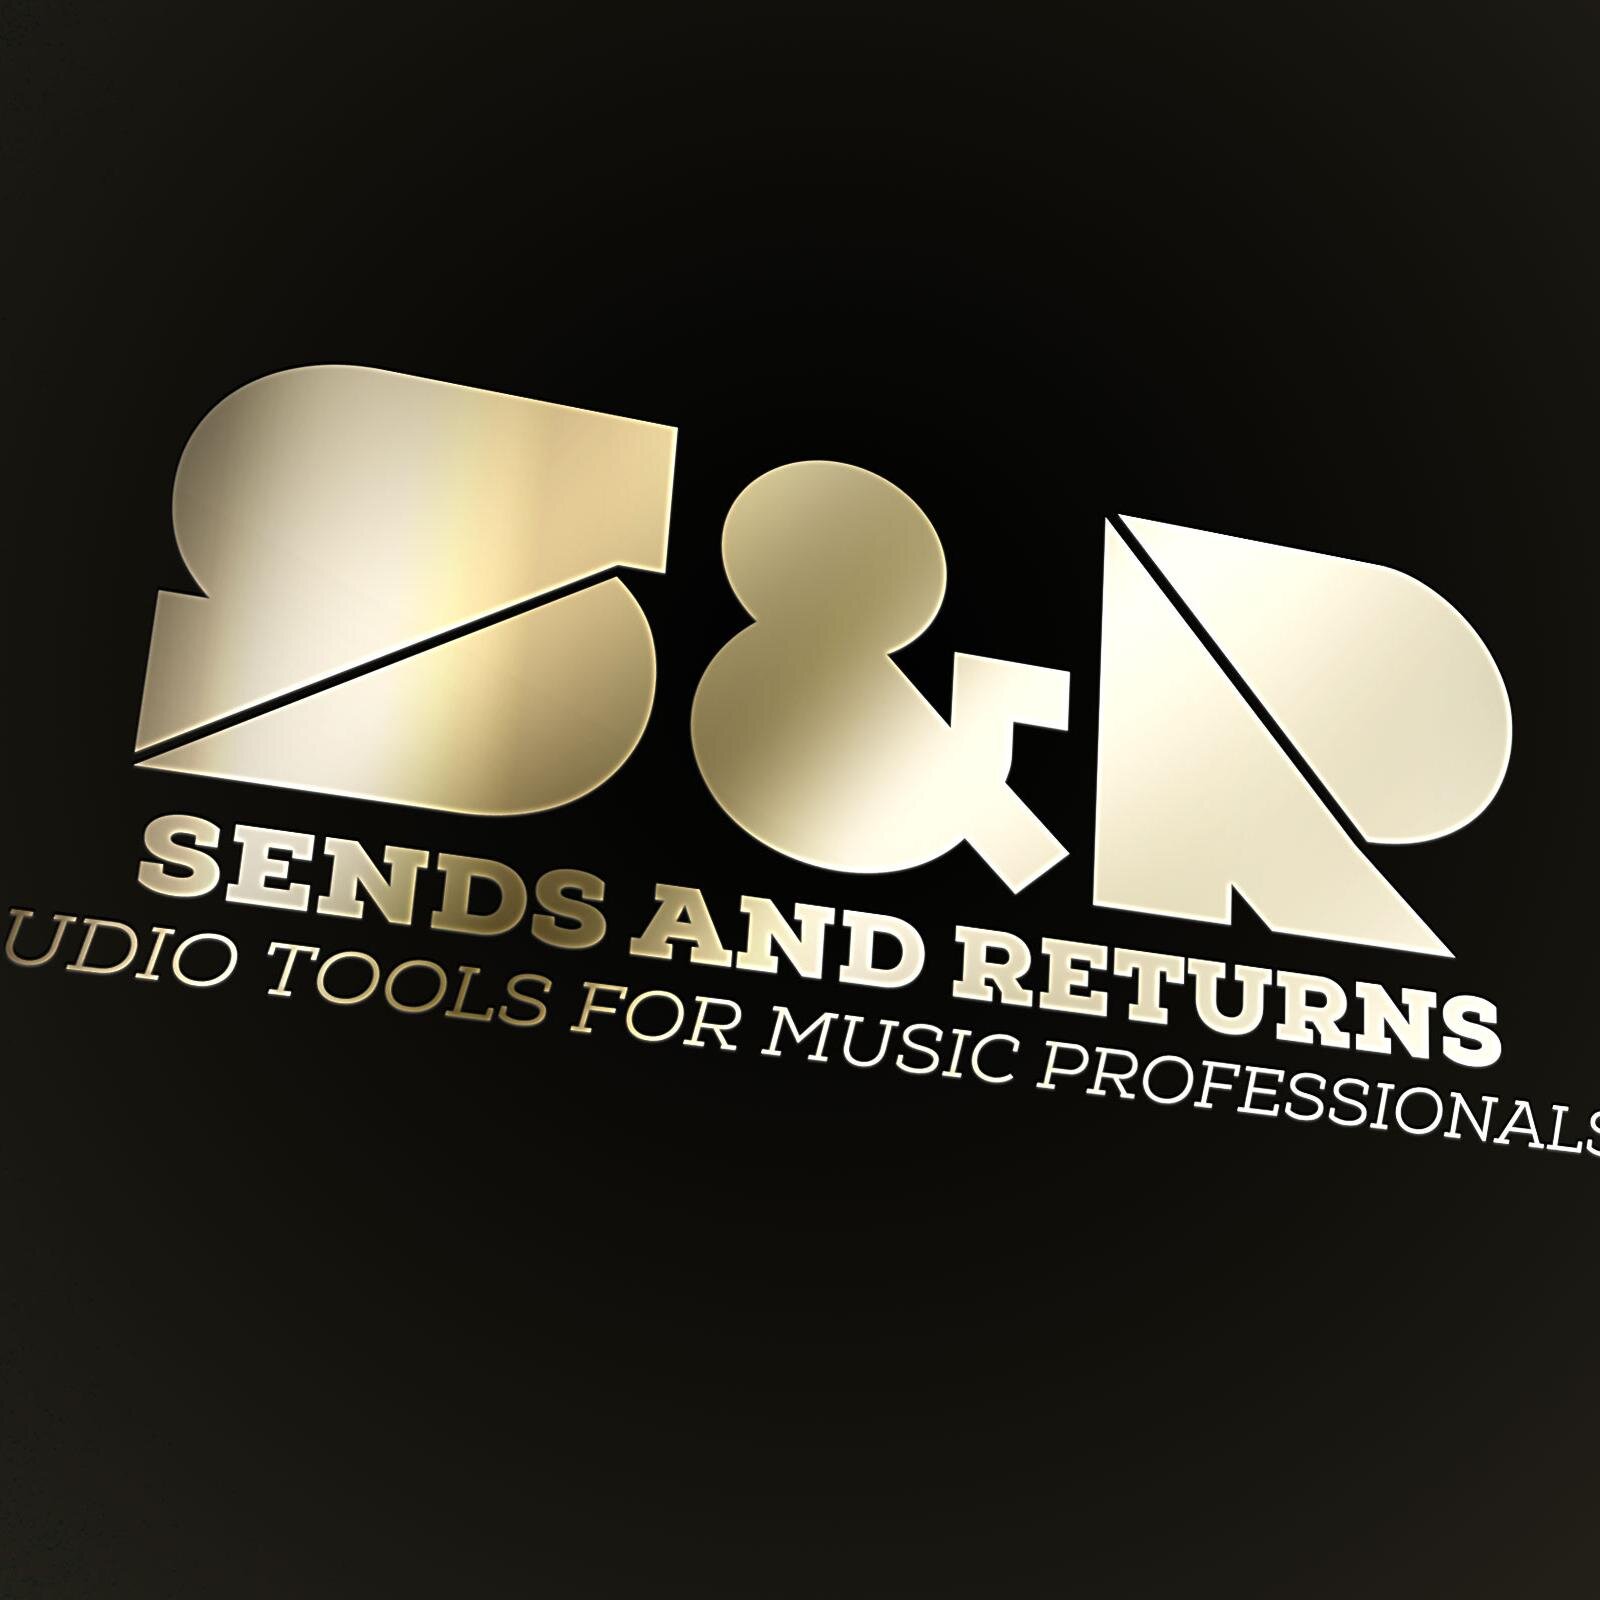 Audio Tools for Music Professionals http://t.co/C2gJGntW1i